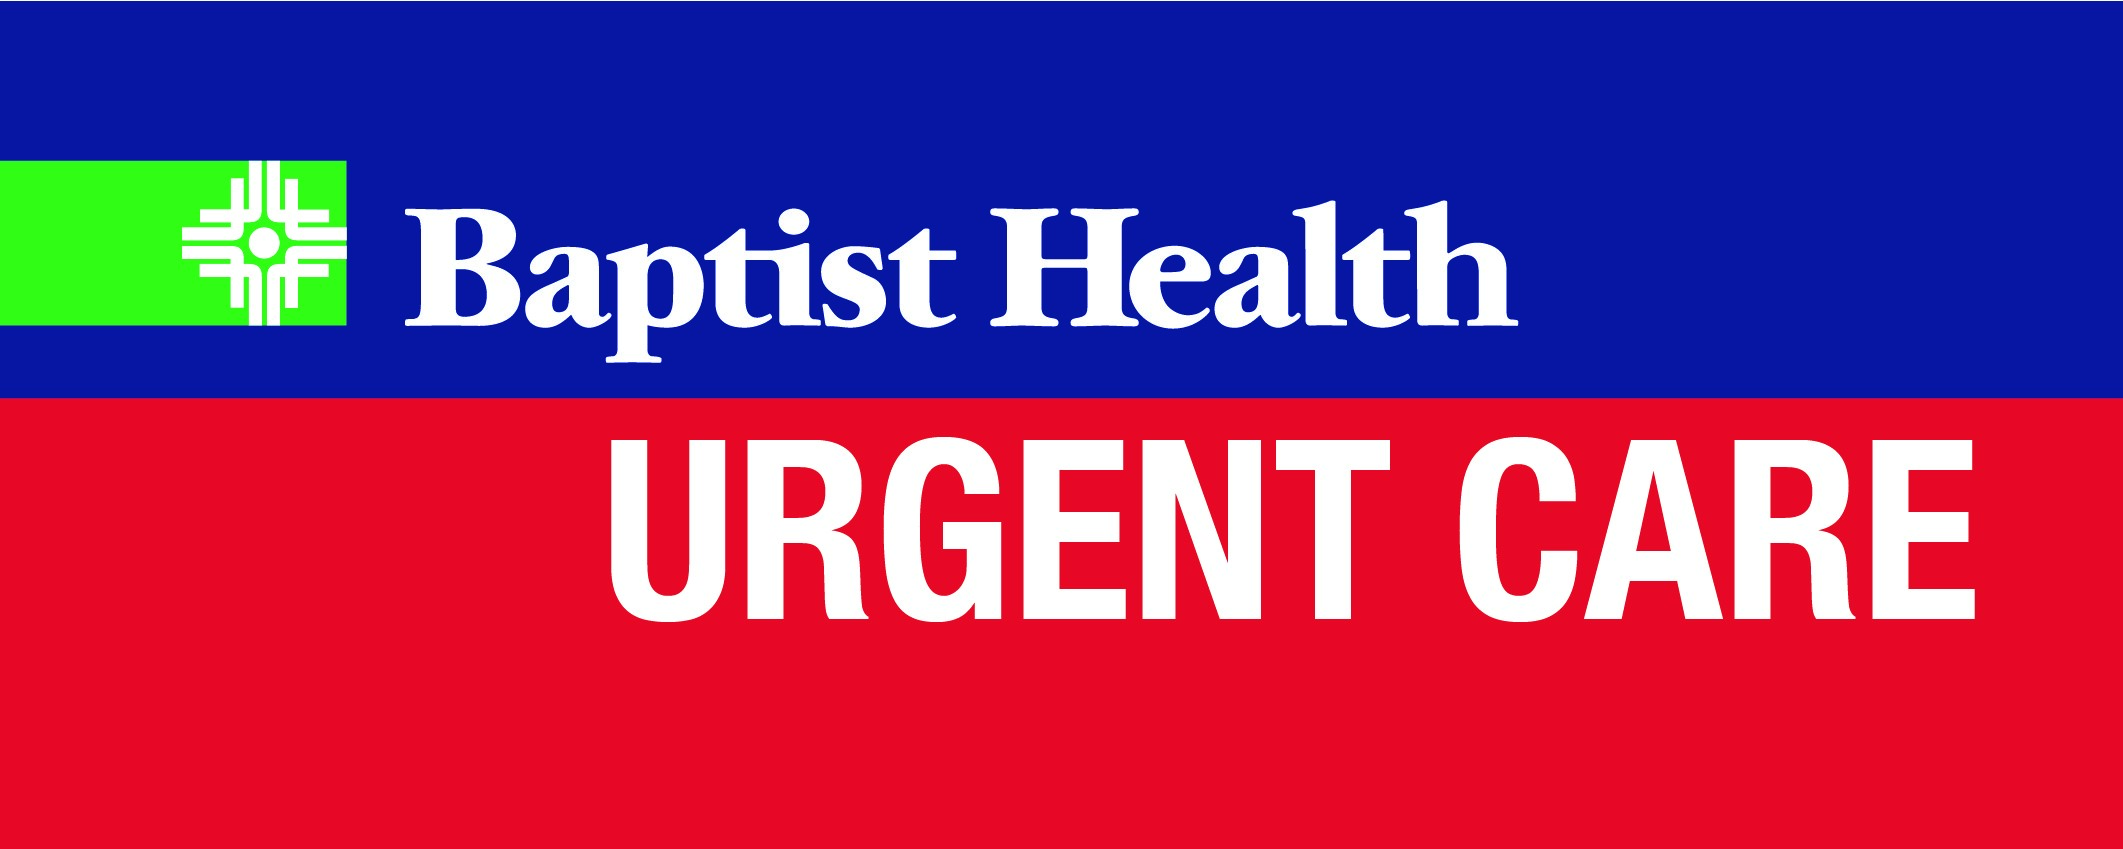 Baptist Health Urgent Care - N. Little Rock Logo